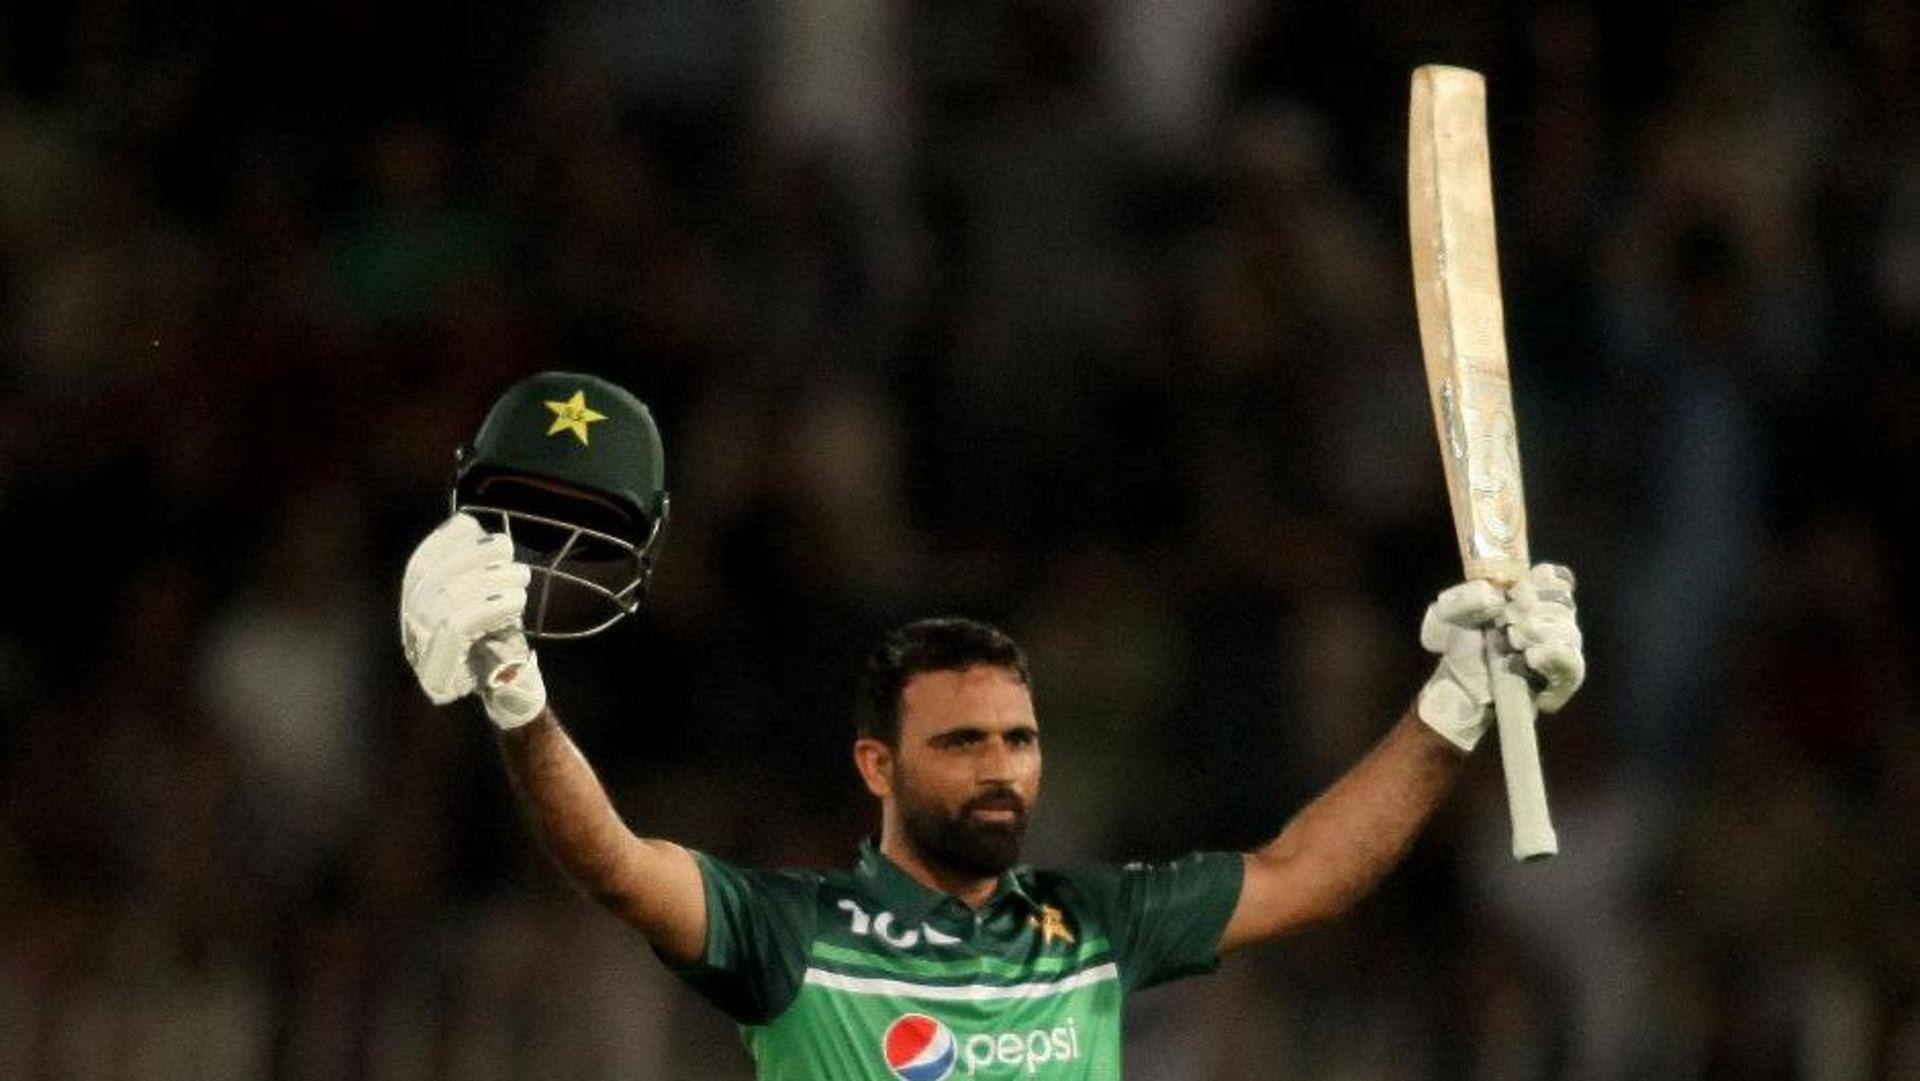 Pakistan humble New Zealand in first ODI: Key stats